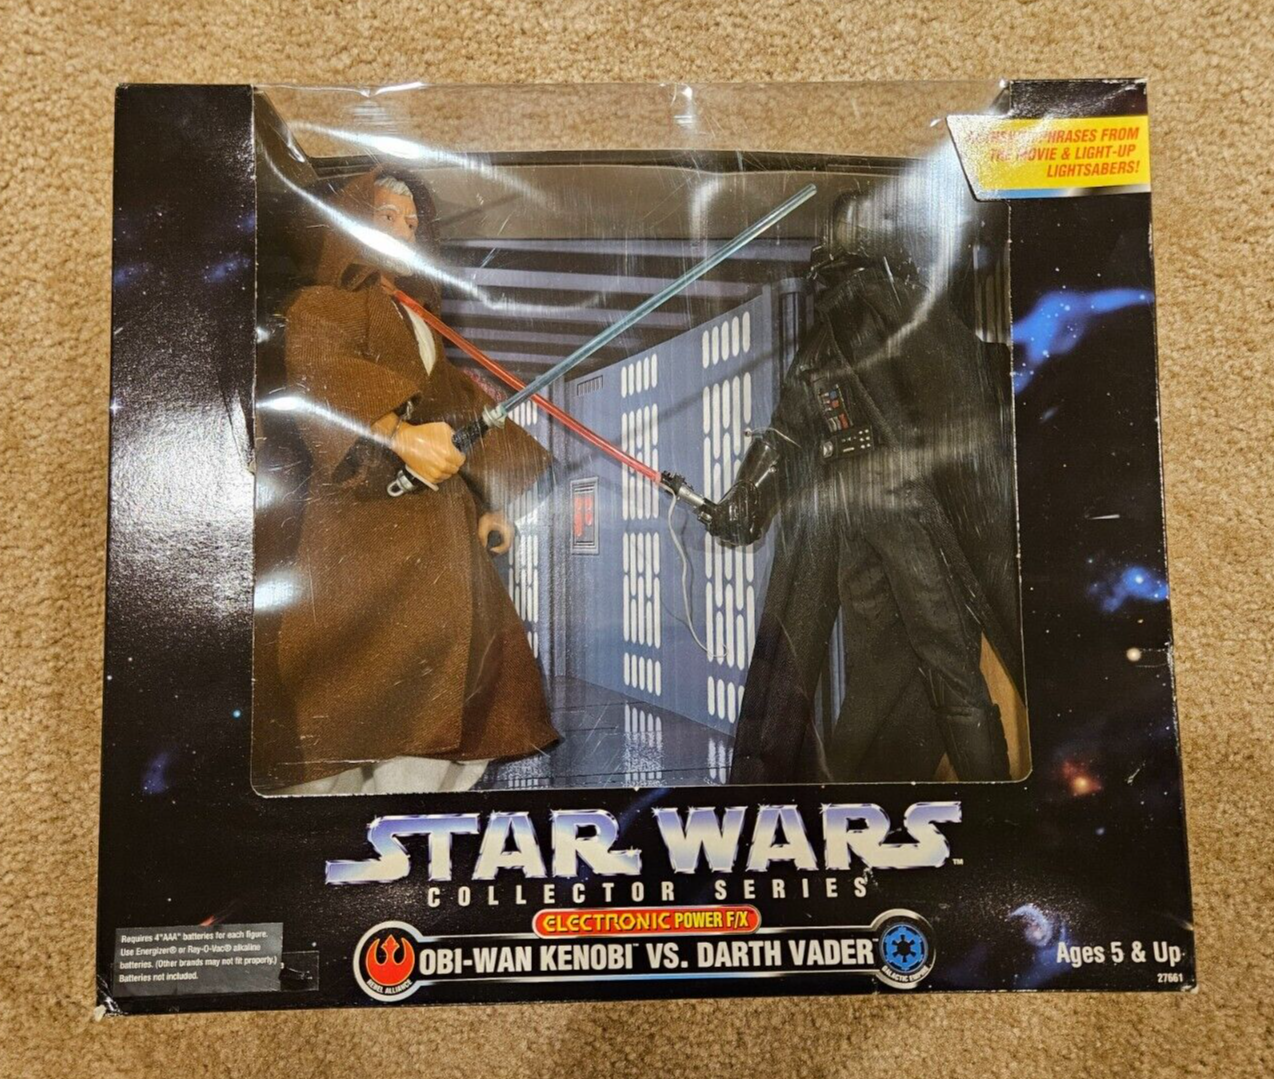 Star Wars Collector Series Electronic Obi Wan Kenobi vs Darth Vader 12 inch MIB Kenner